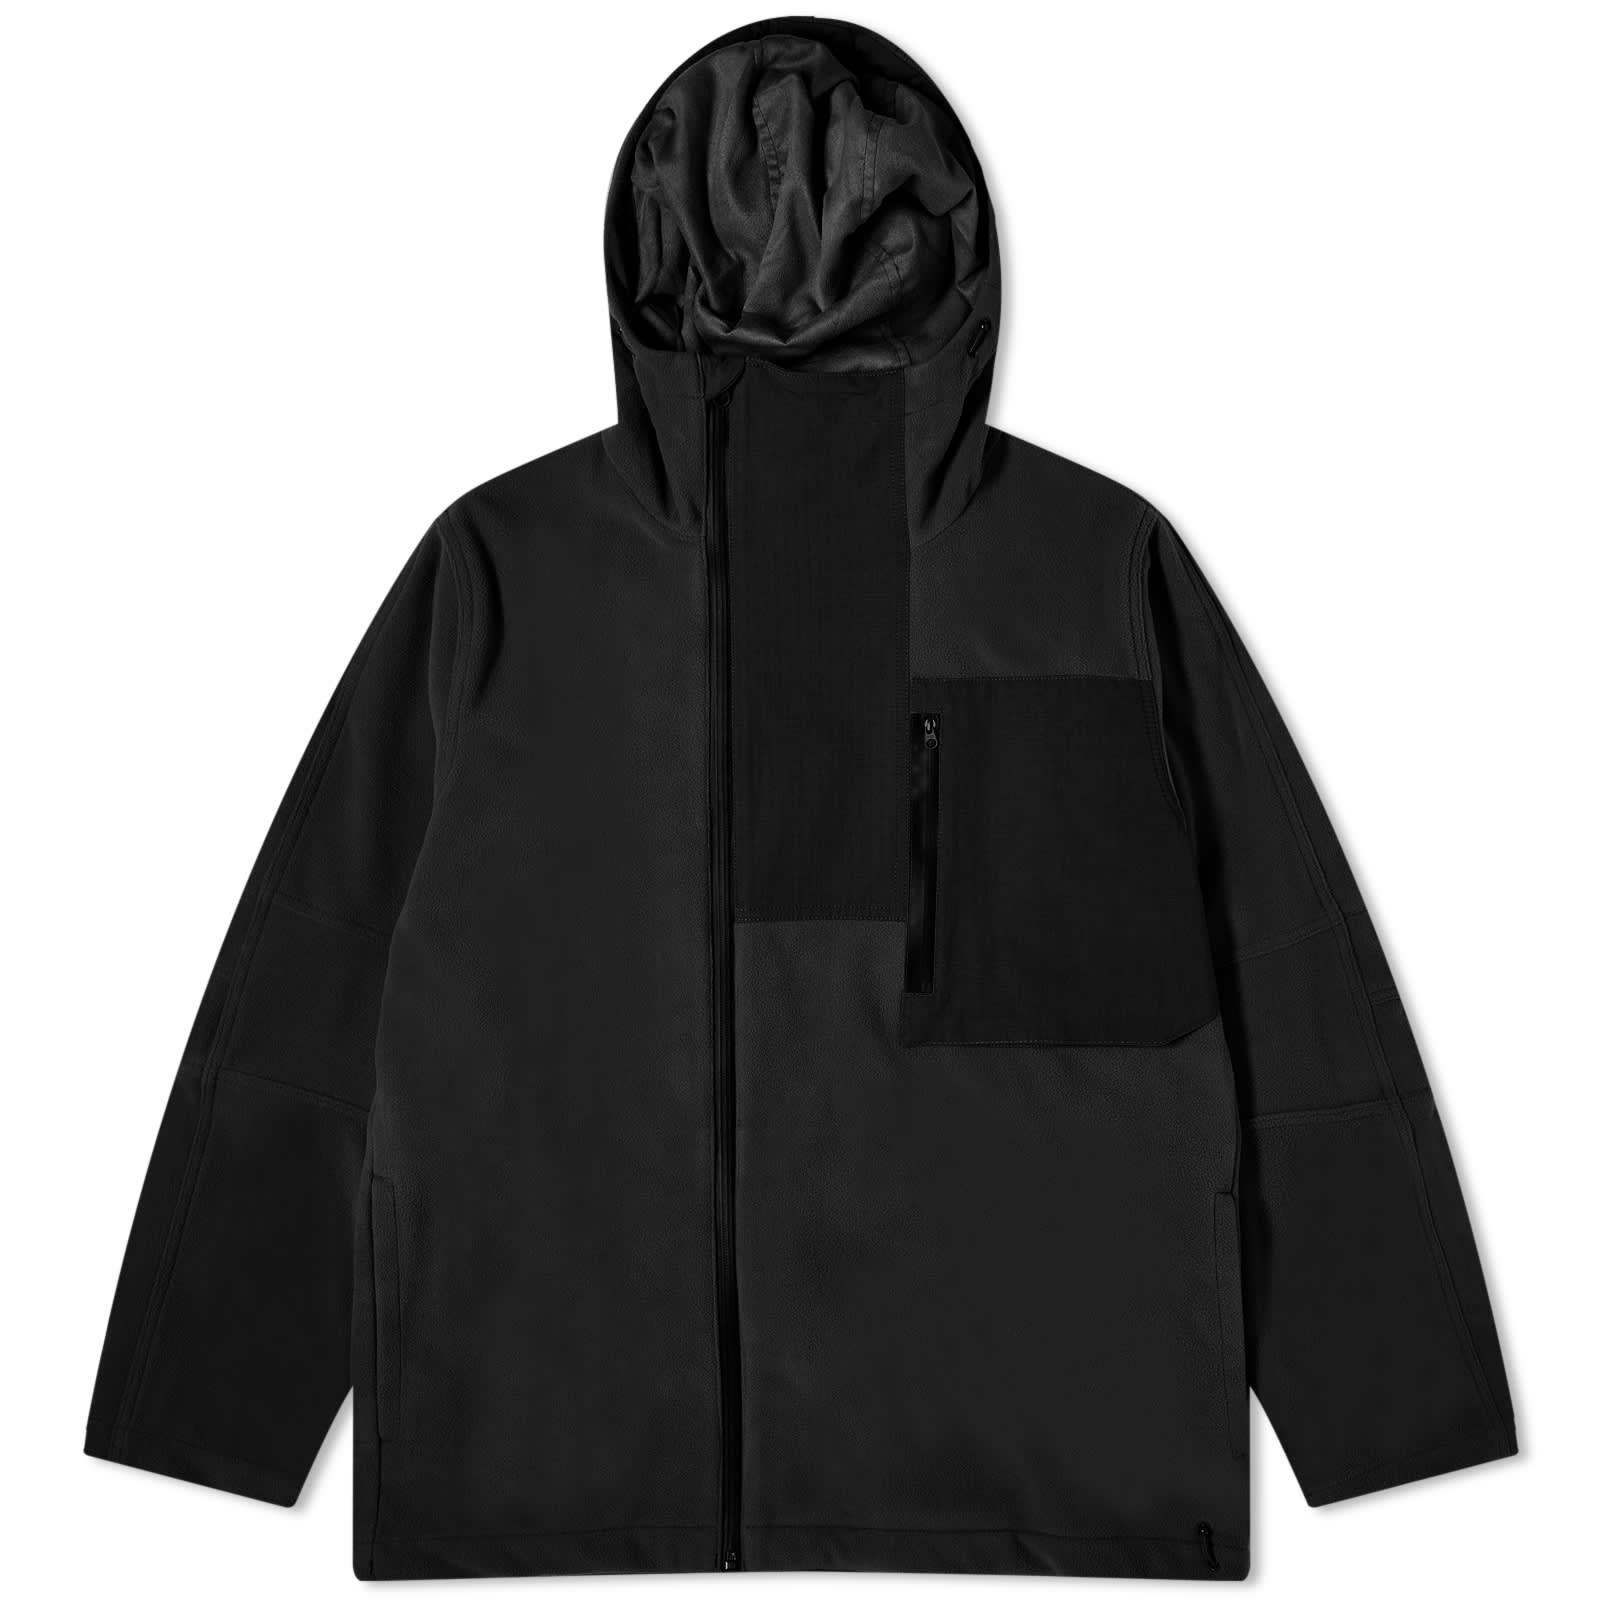 Куртка Maharishi Asym Zipped Hooded Fleece, черный куртка кофта uniqlo fleece zipped винный